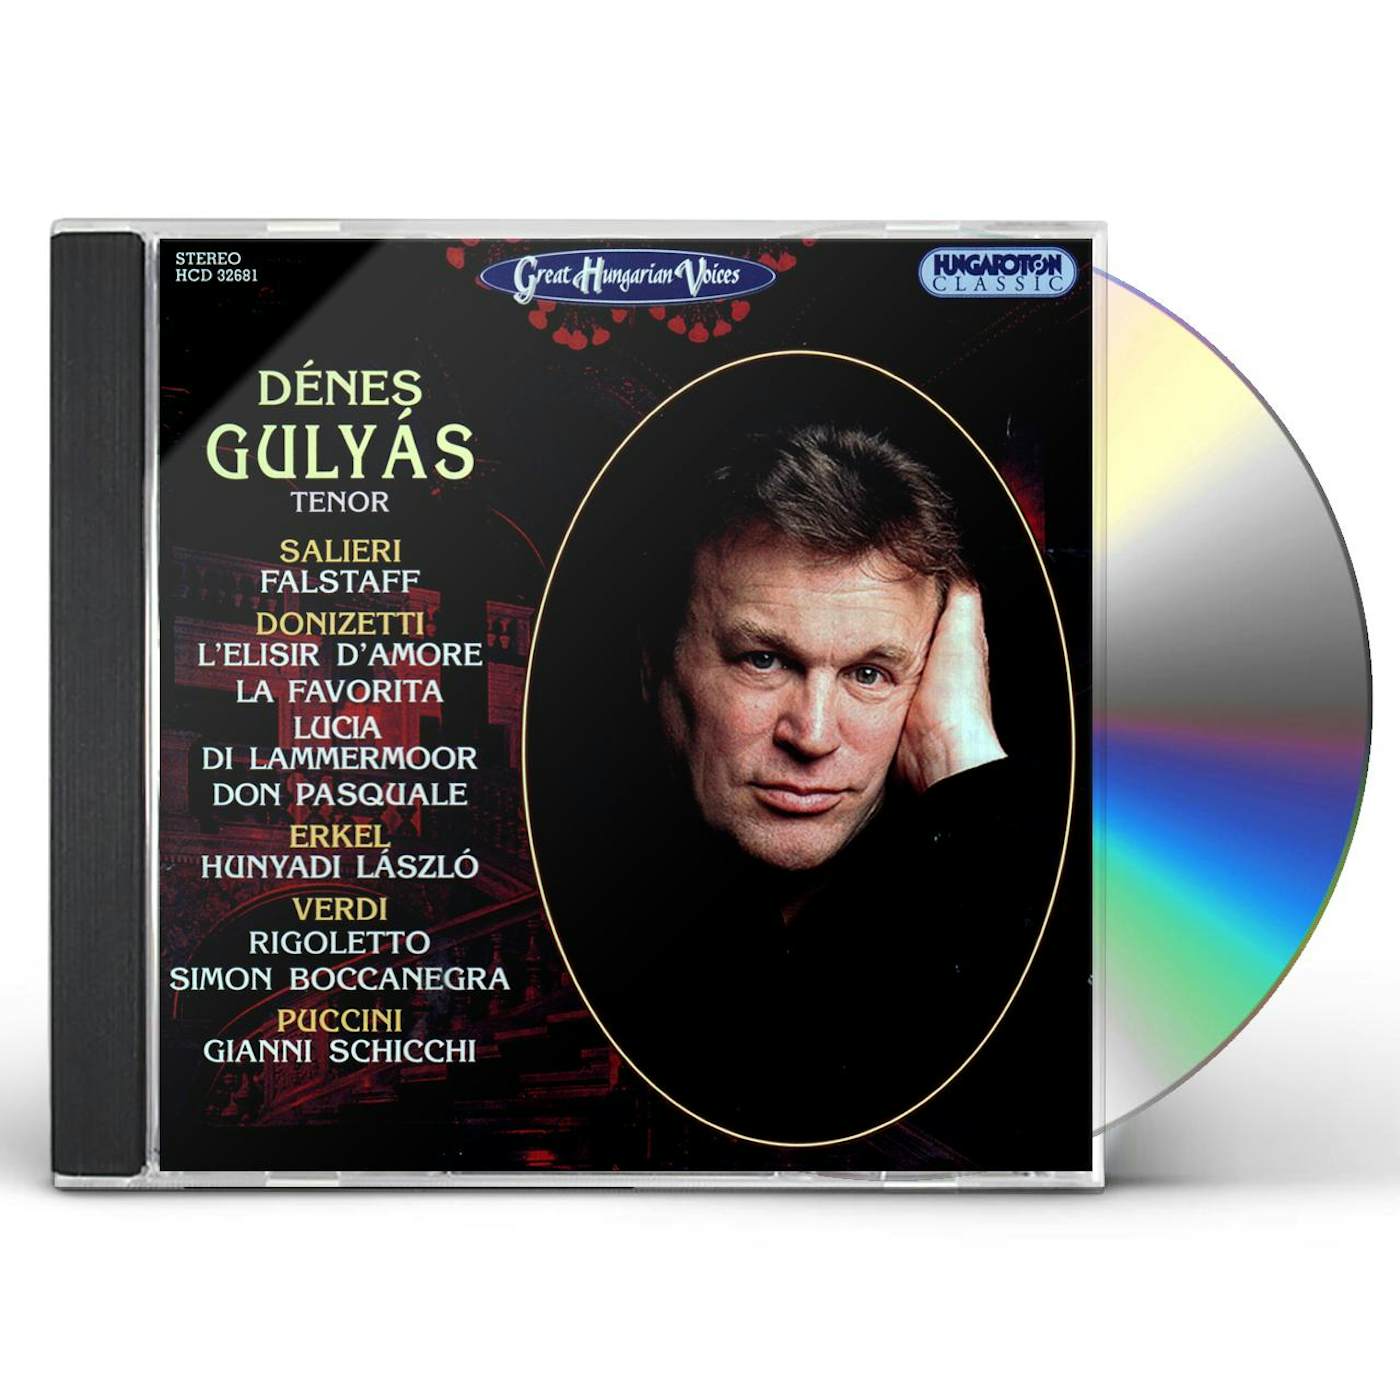 DENES GULYAS: TENOR CD